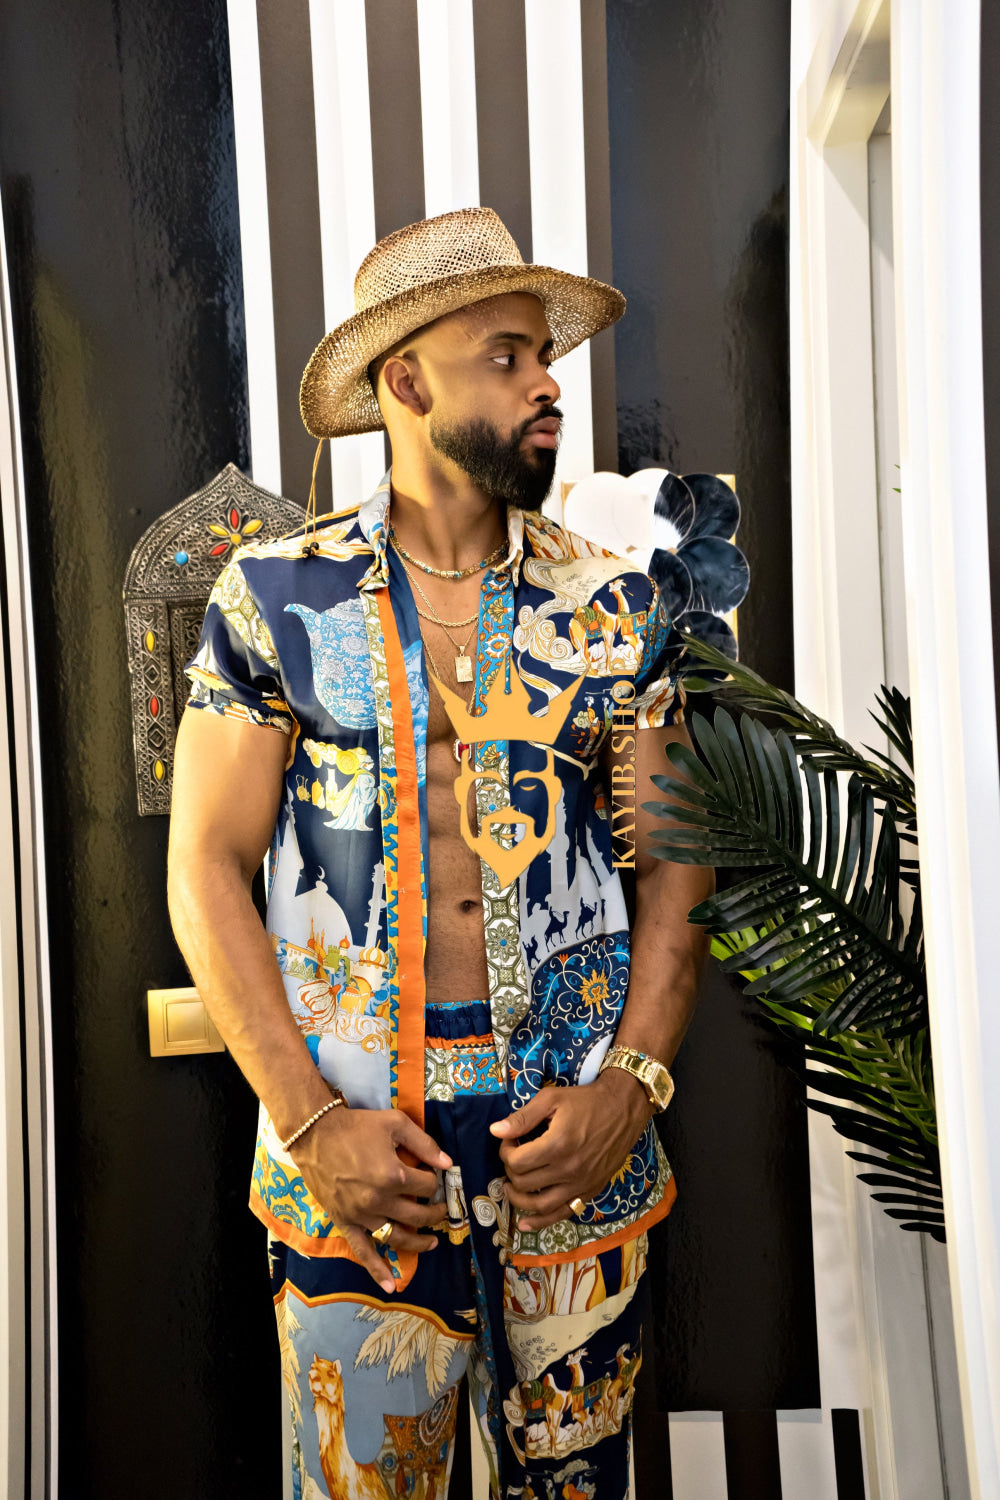 Luxury Men's Silk Summer Set outfits